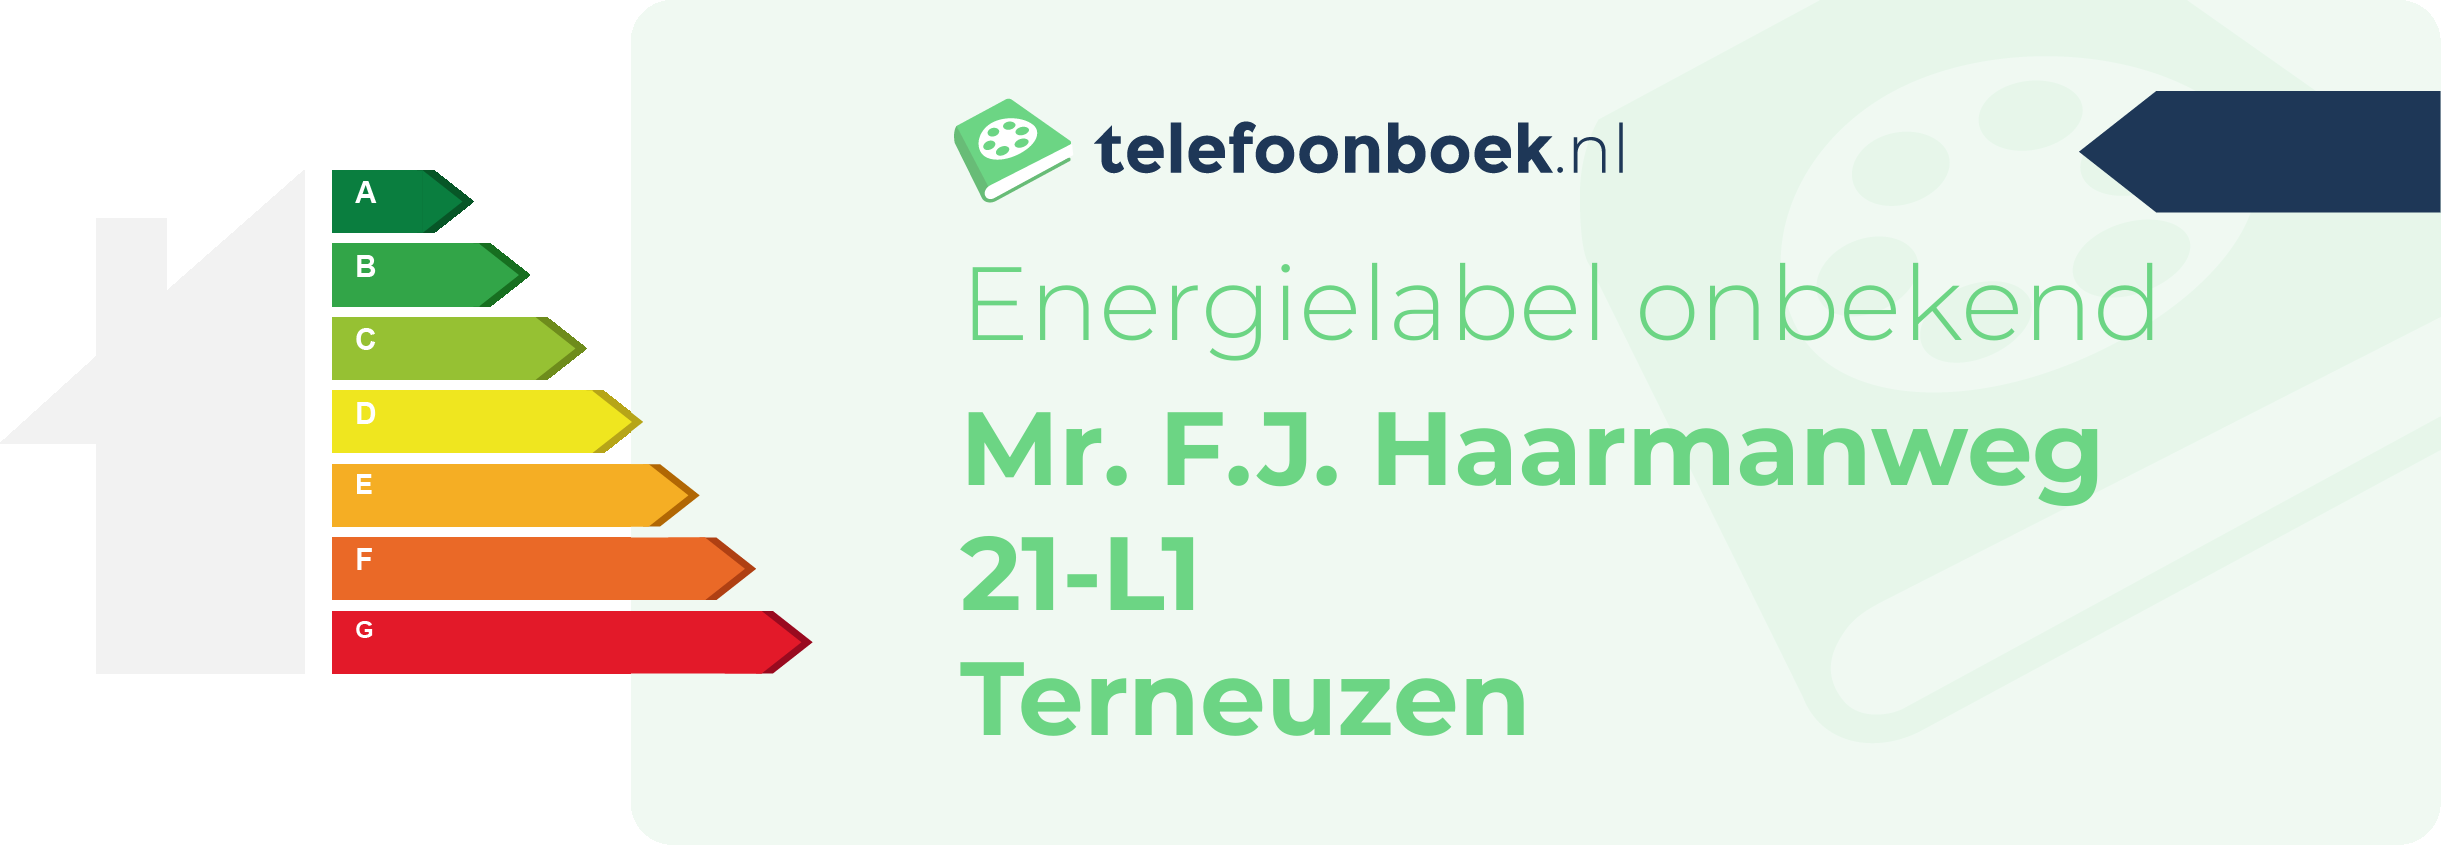 Energielabel Mr. F.J. Haarmanweg 21-L1 Terneuzen